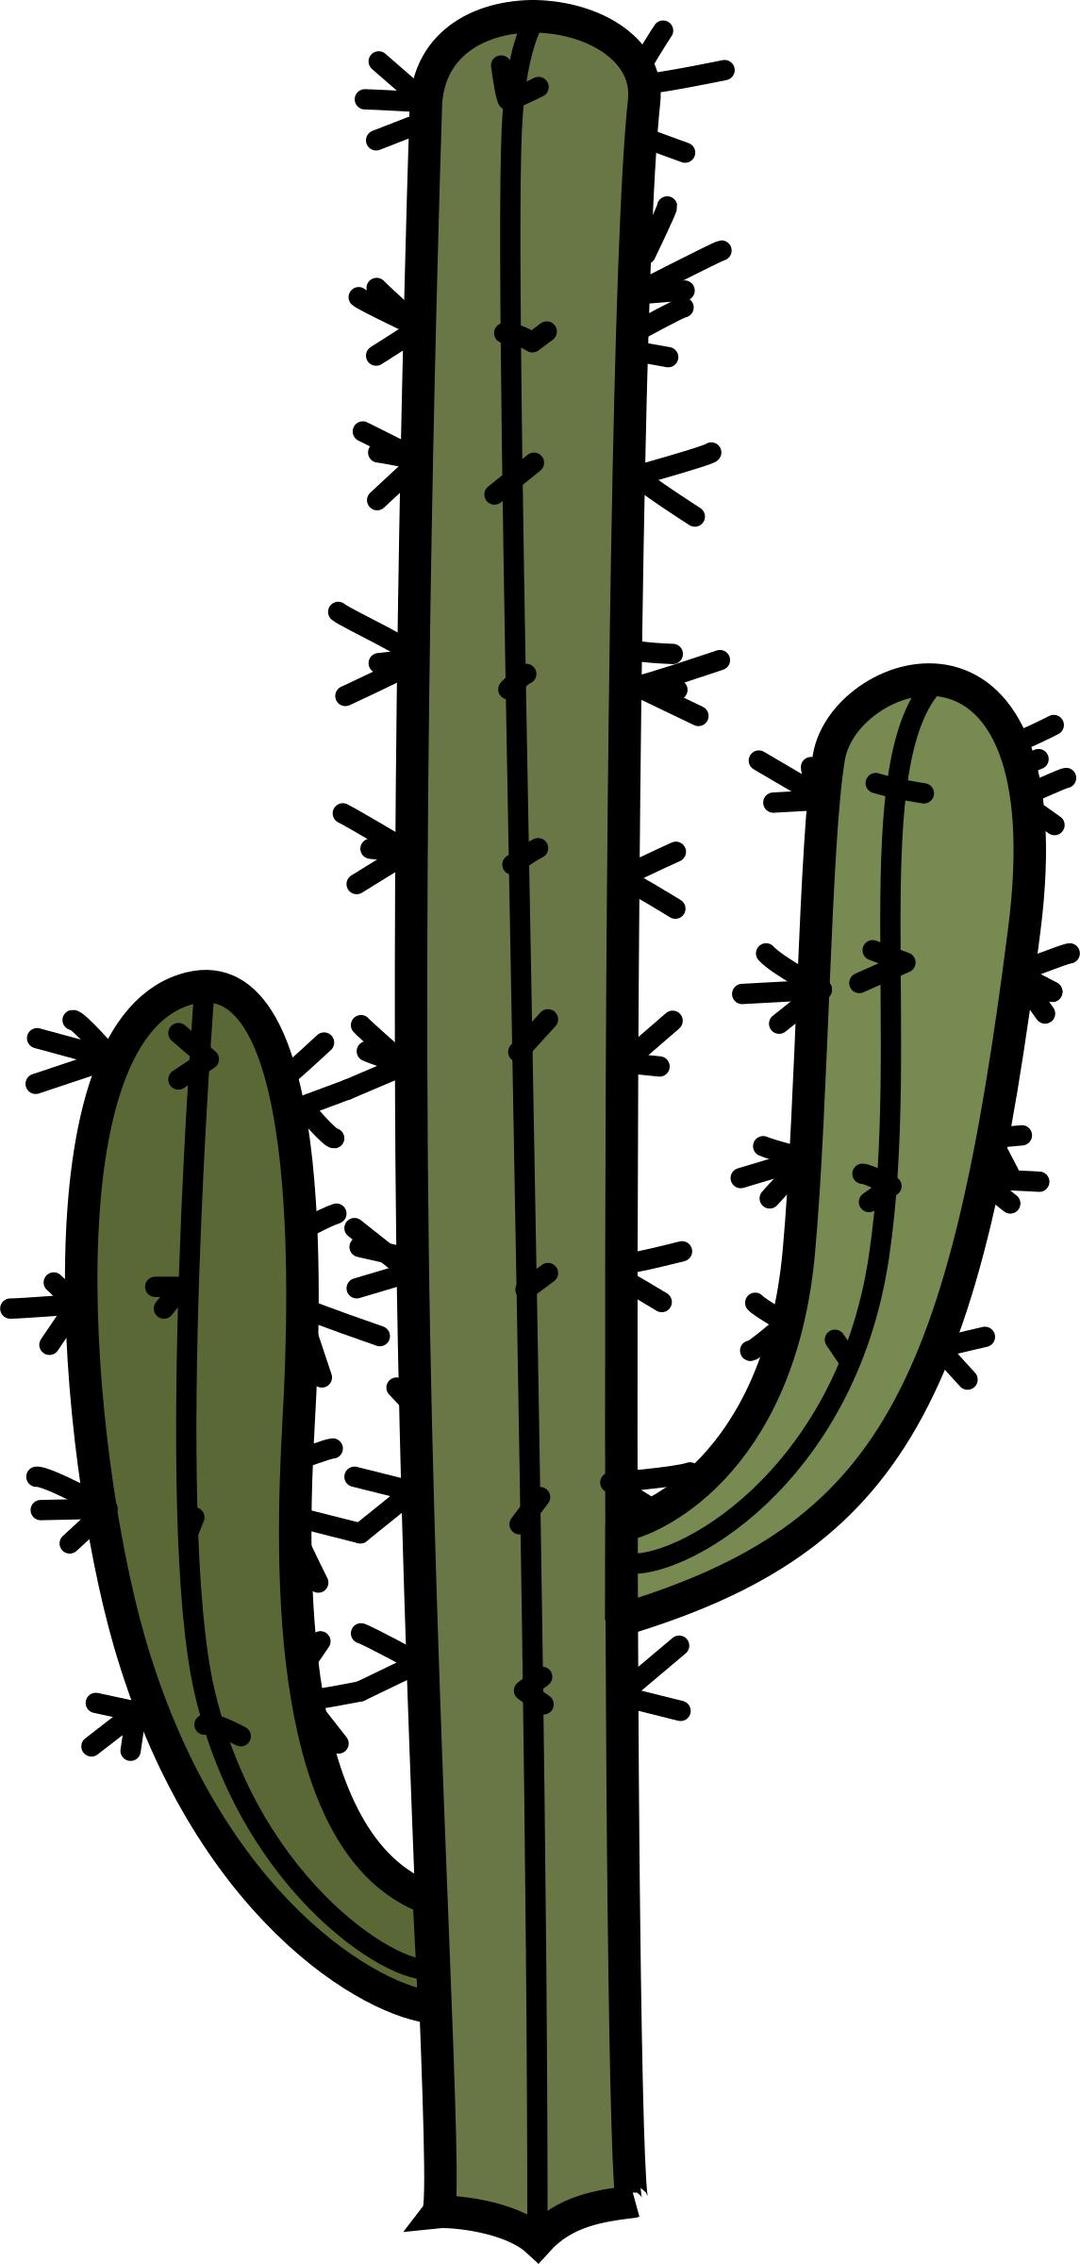 cactus with arms png transparent